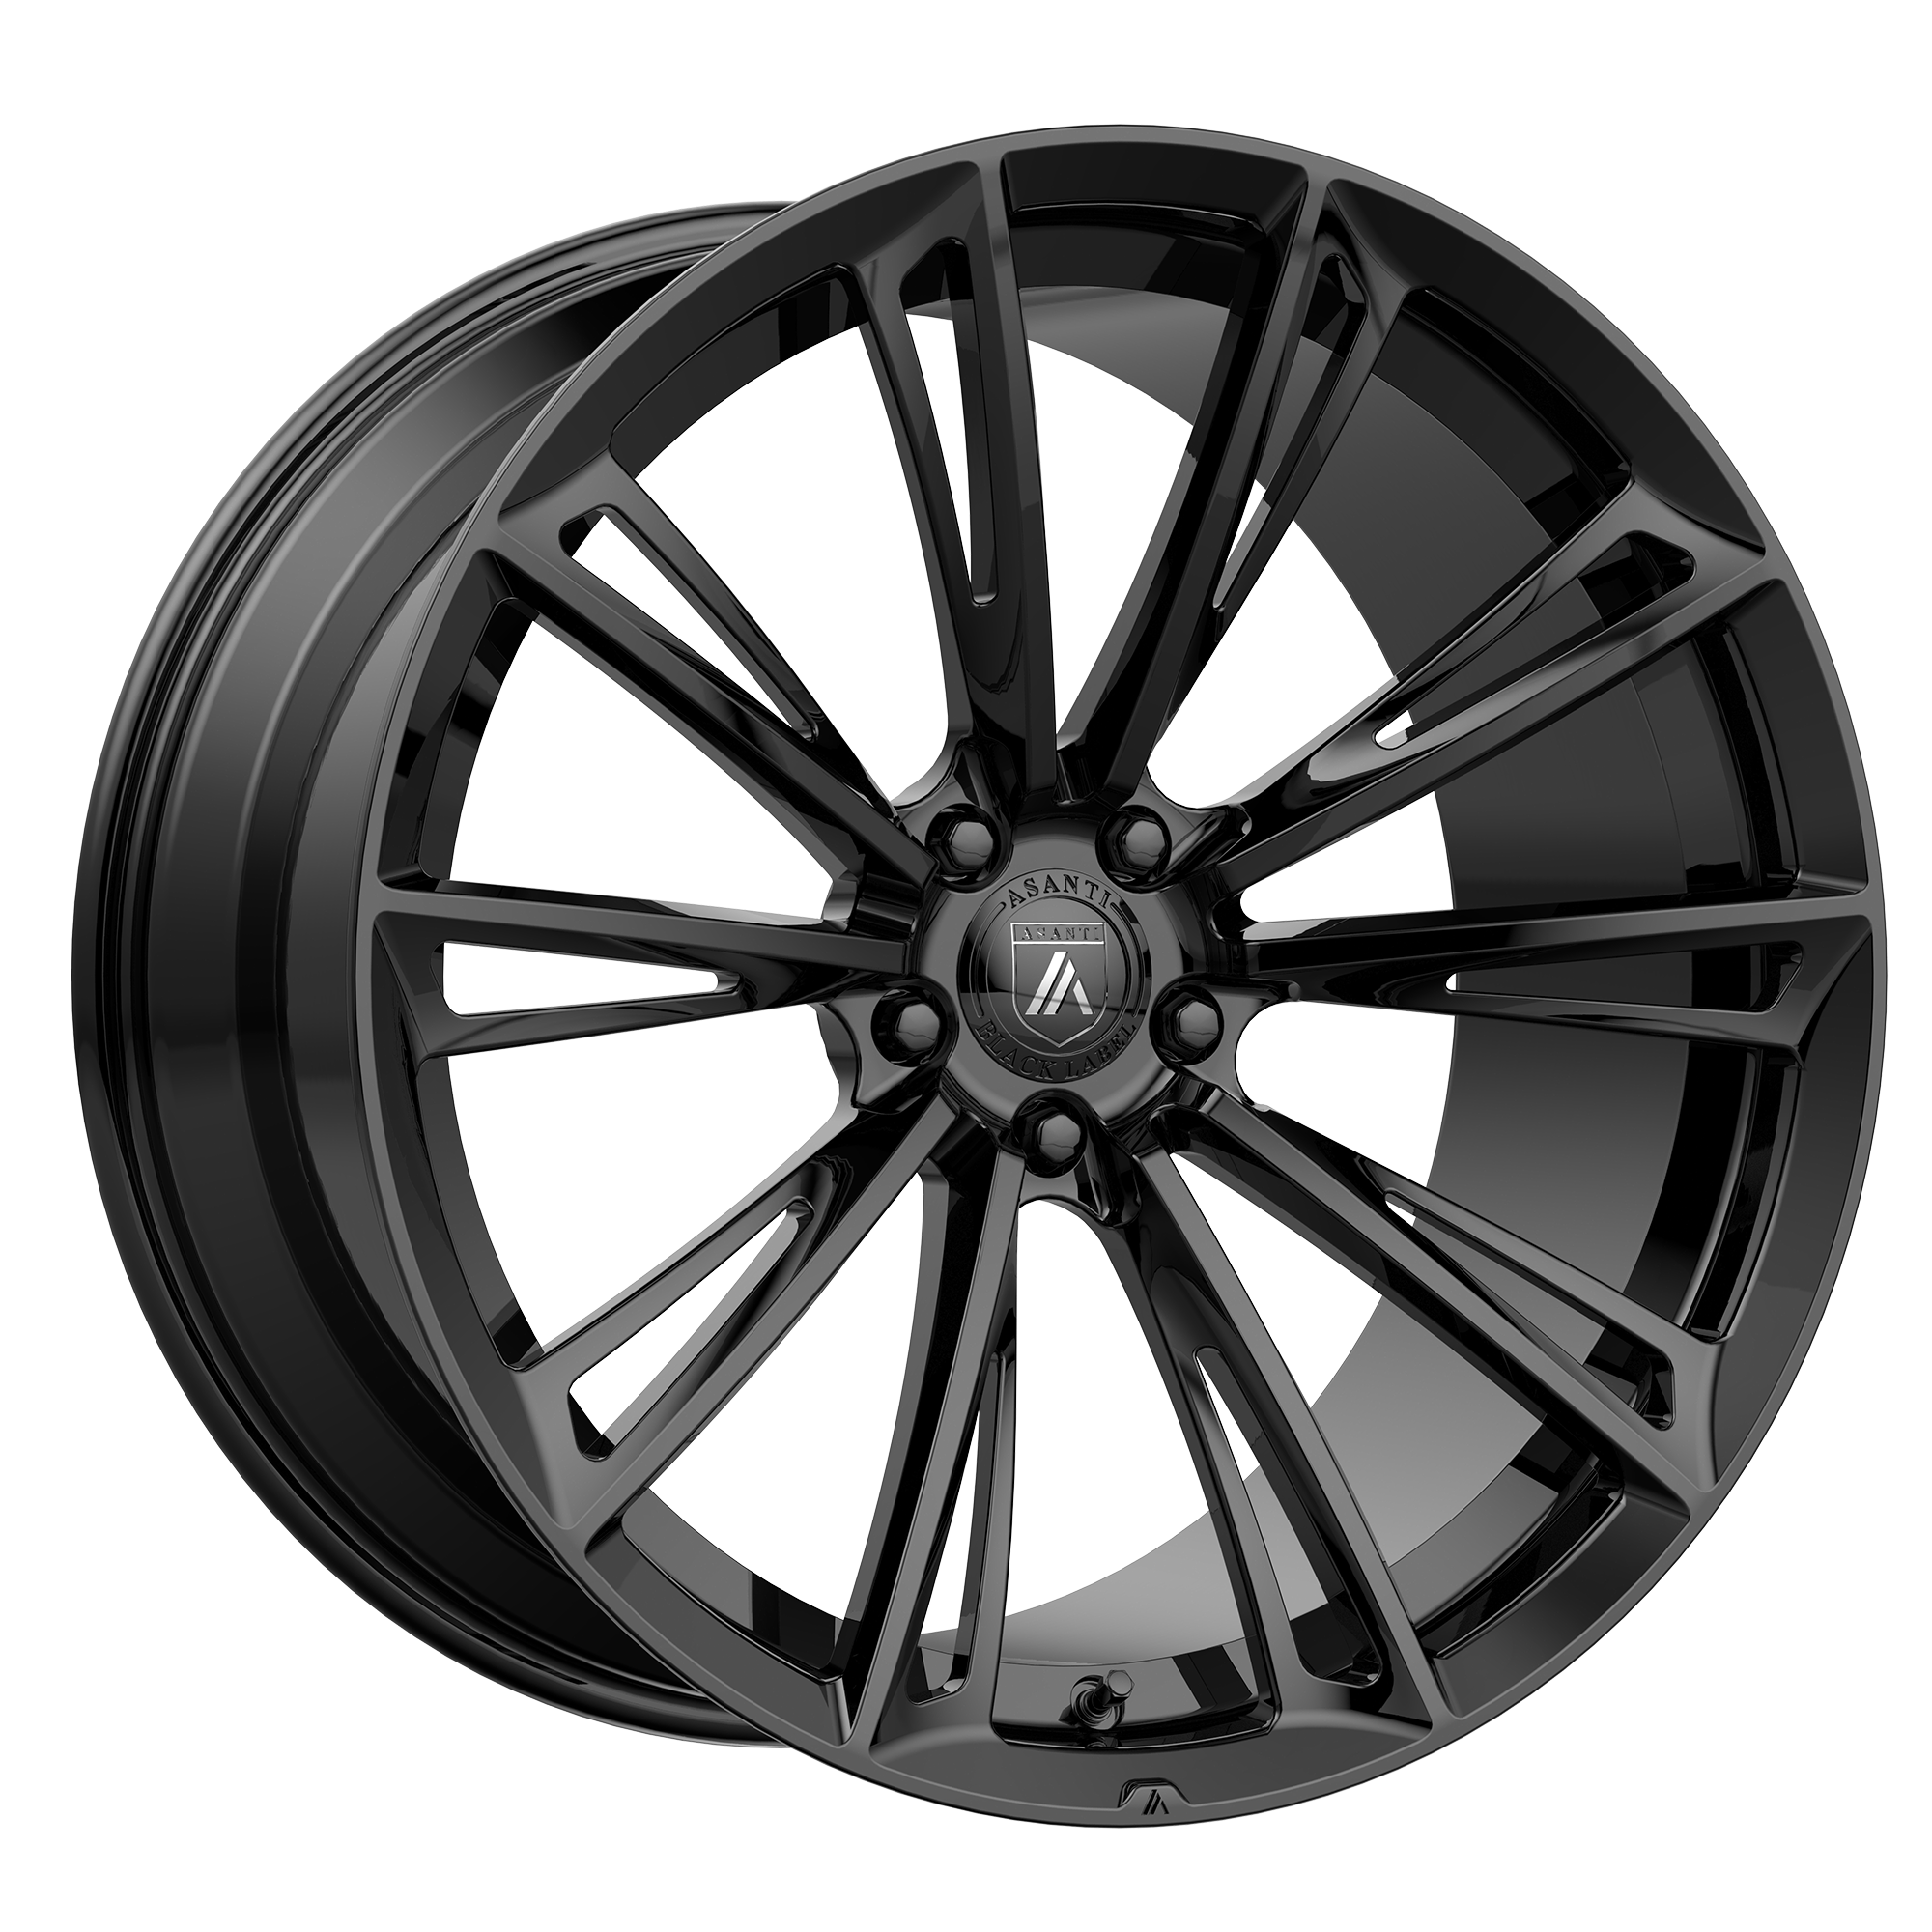 CORONA 22x10.5 5x114.30 GLOSS BLACK (35 mm) - Tires and Engine Performance